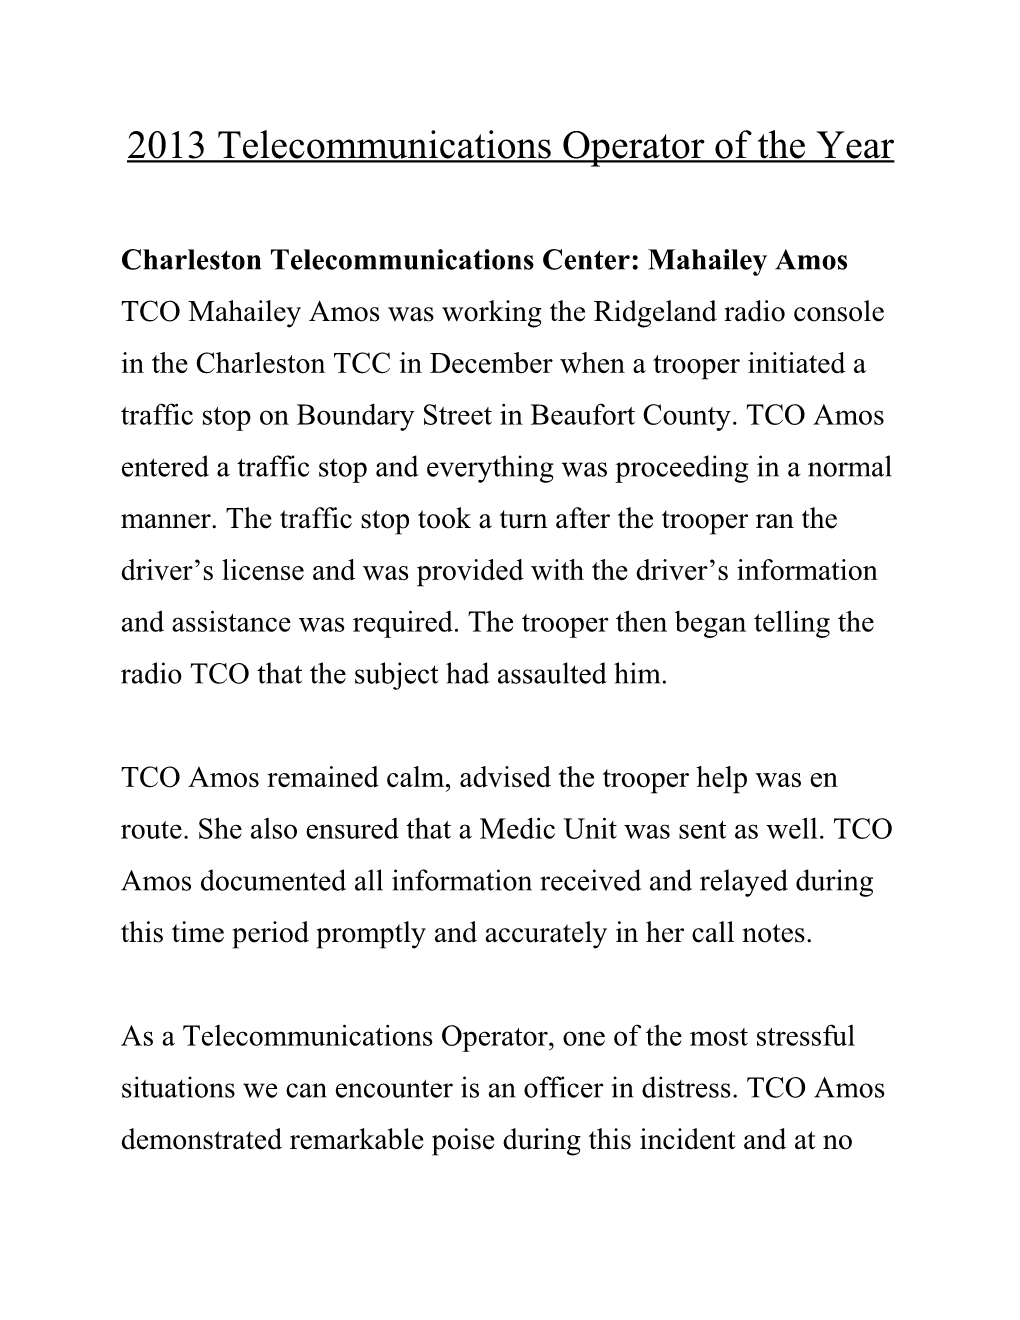 Charleston Telecommunications Center: Mahailey Amos